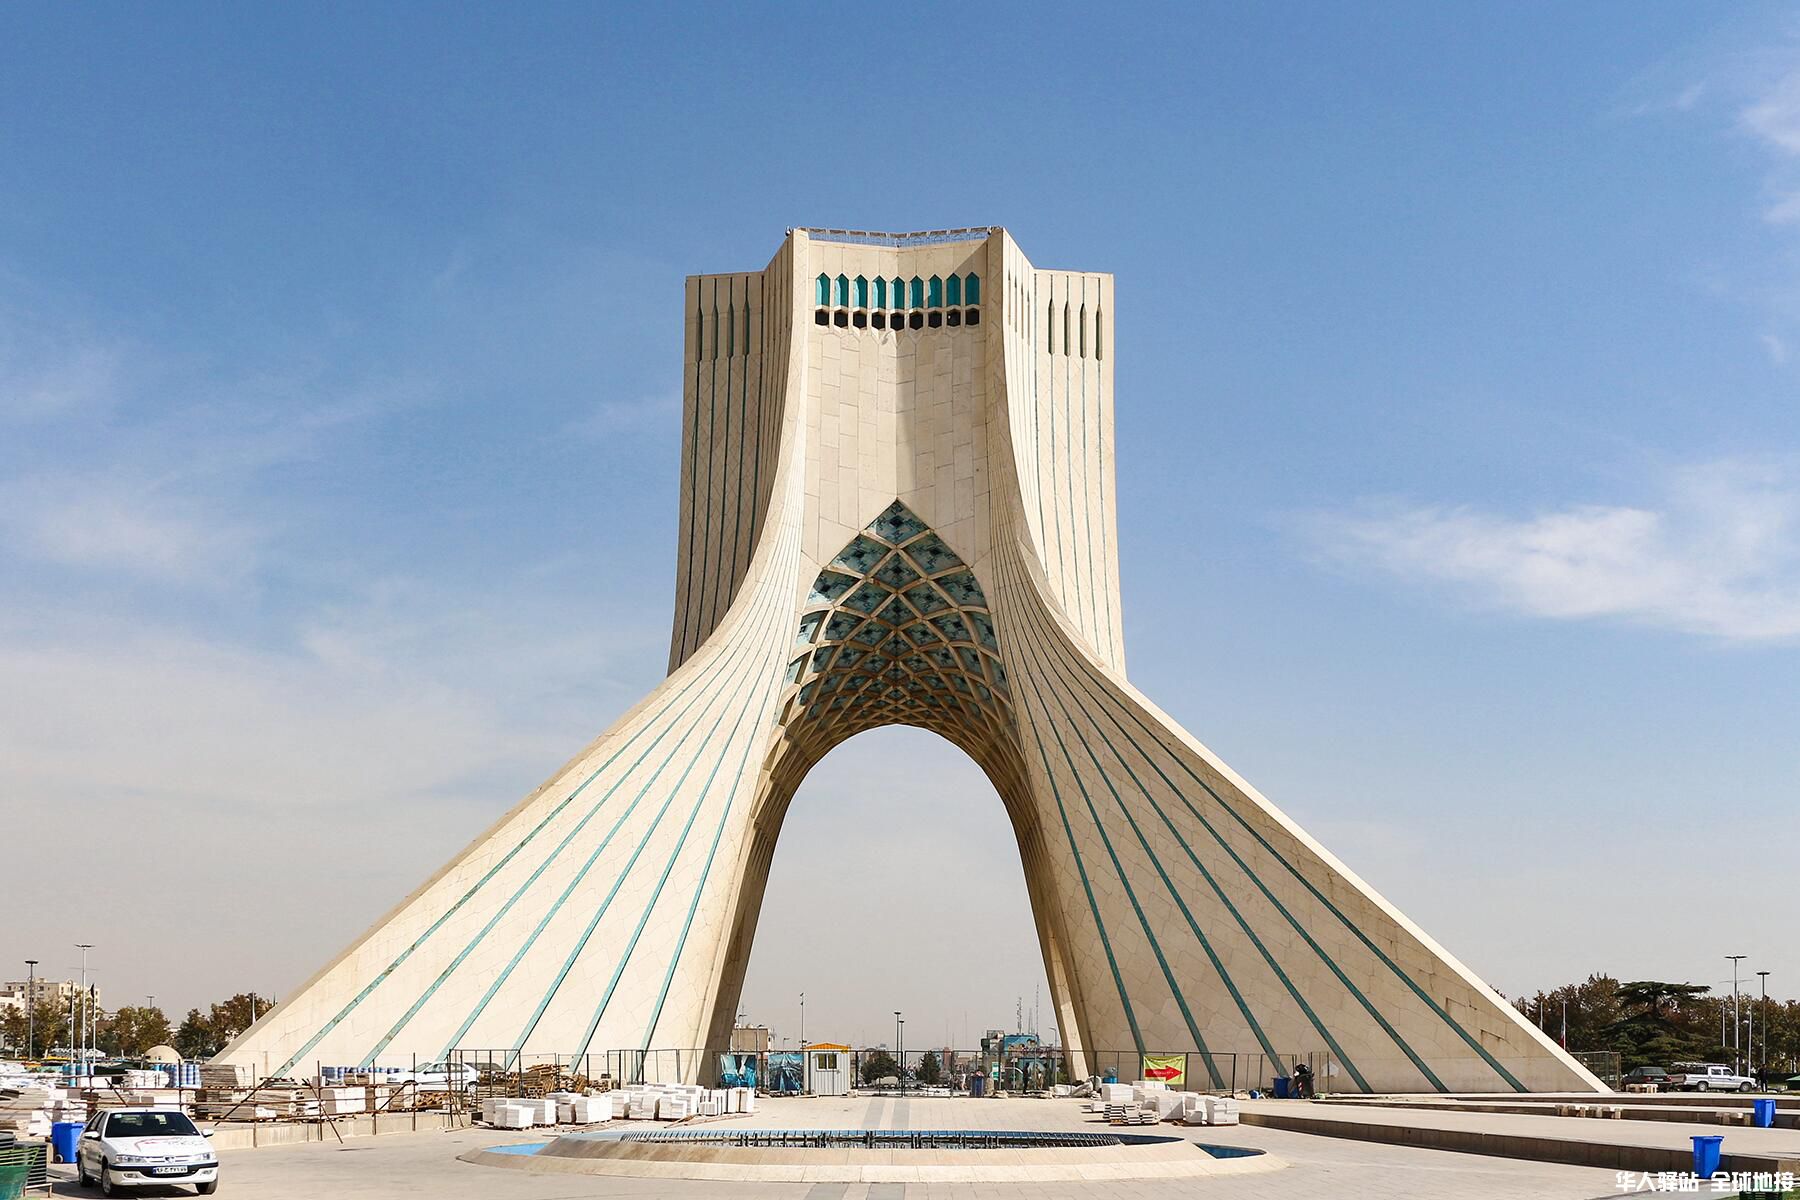 09_IranCulturalSites__AzadiTower_9.-Azadi_Tower_Tehran.jpg